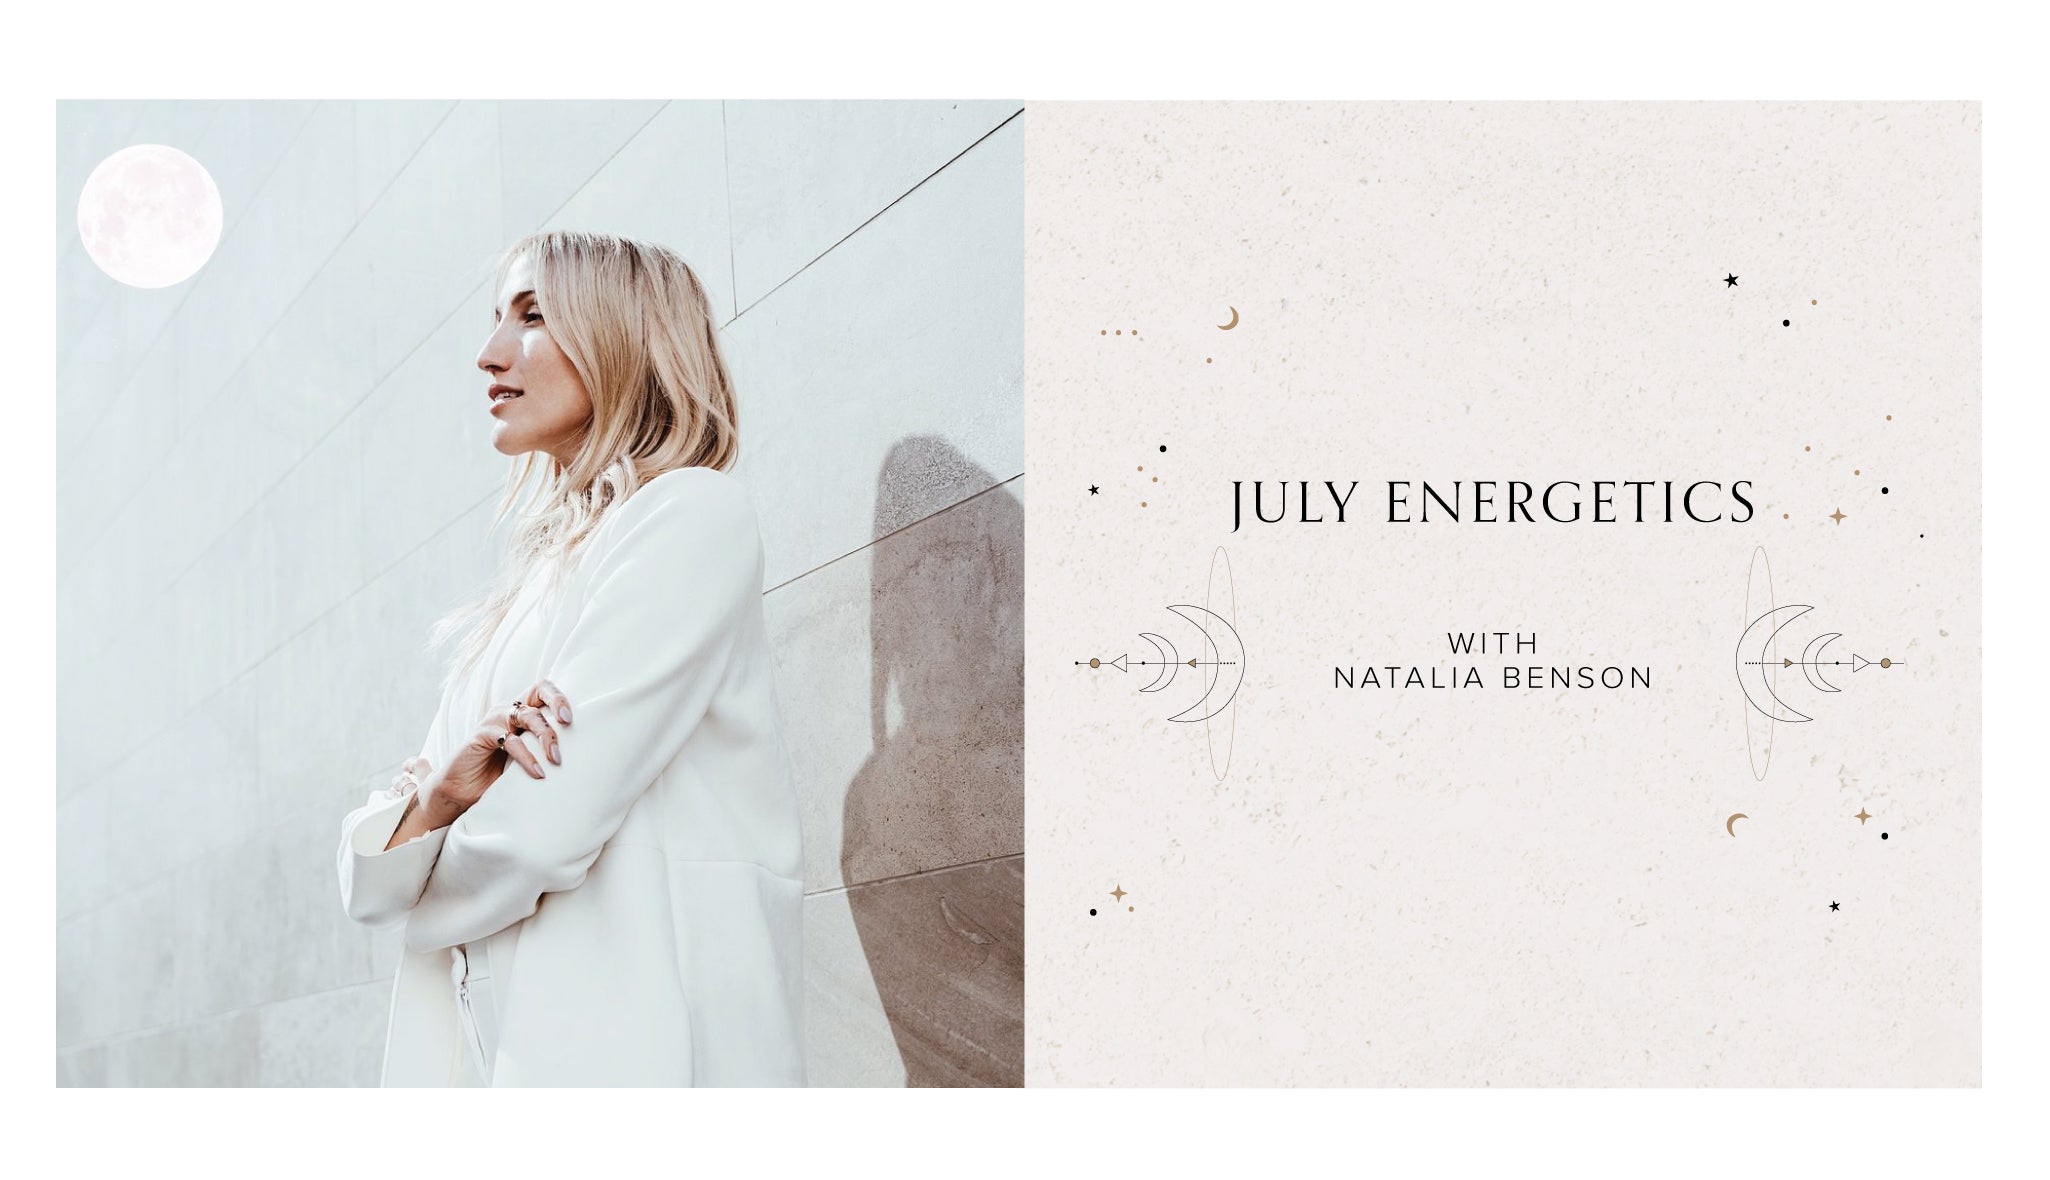 July Energetics with Natalia Benson